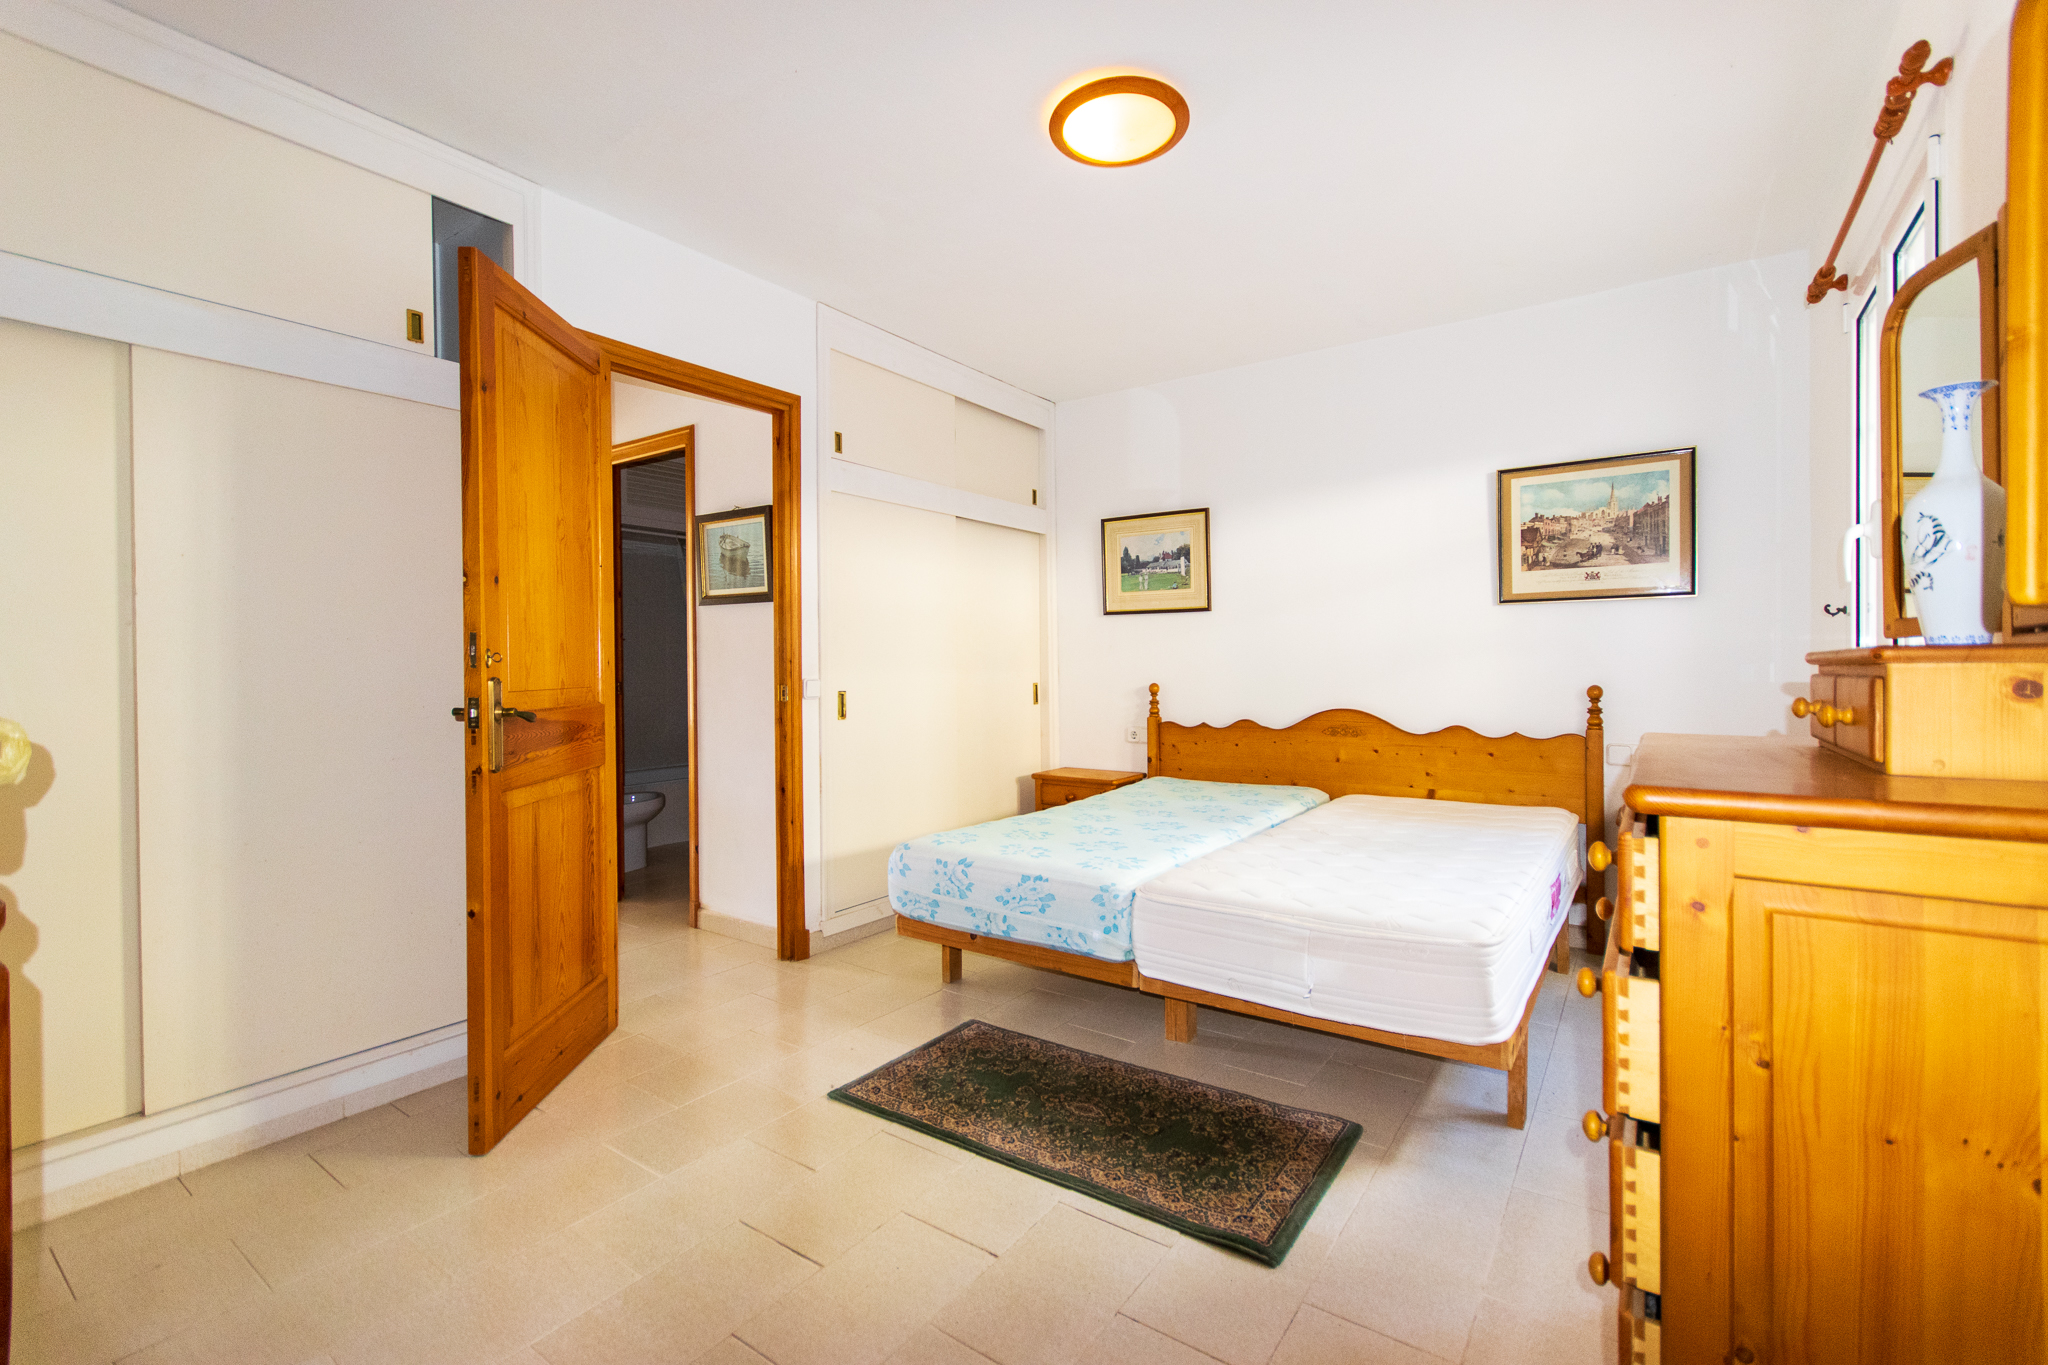 Bedroom with bathroom in duplex with good views in Cala Galdana